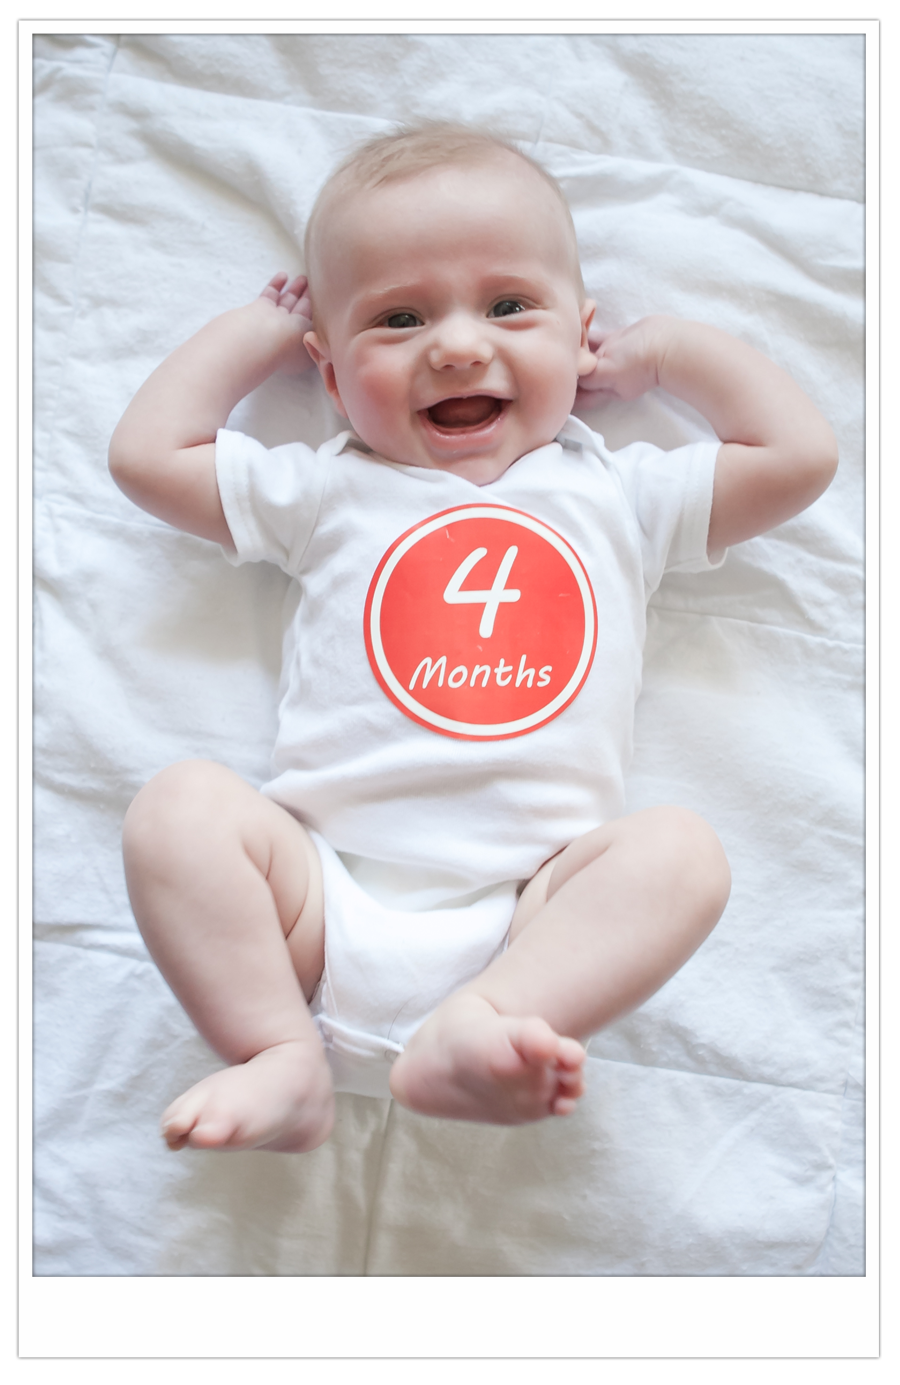 4 months old. 4 Months Baby. 4 Месяца ребенку. 6 Месяцев ребенку. Four months Baby.